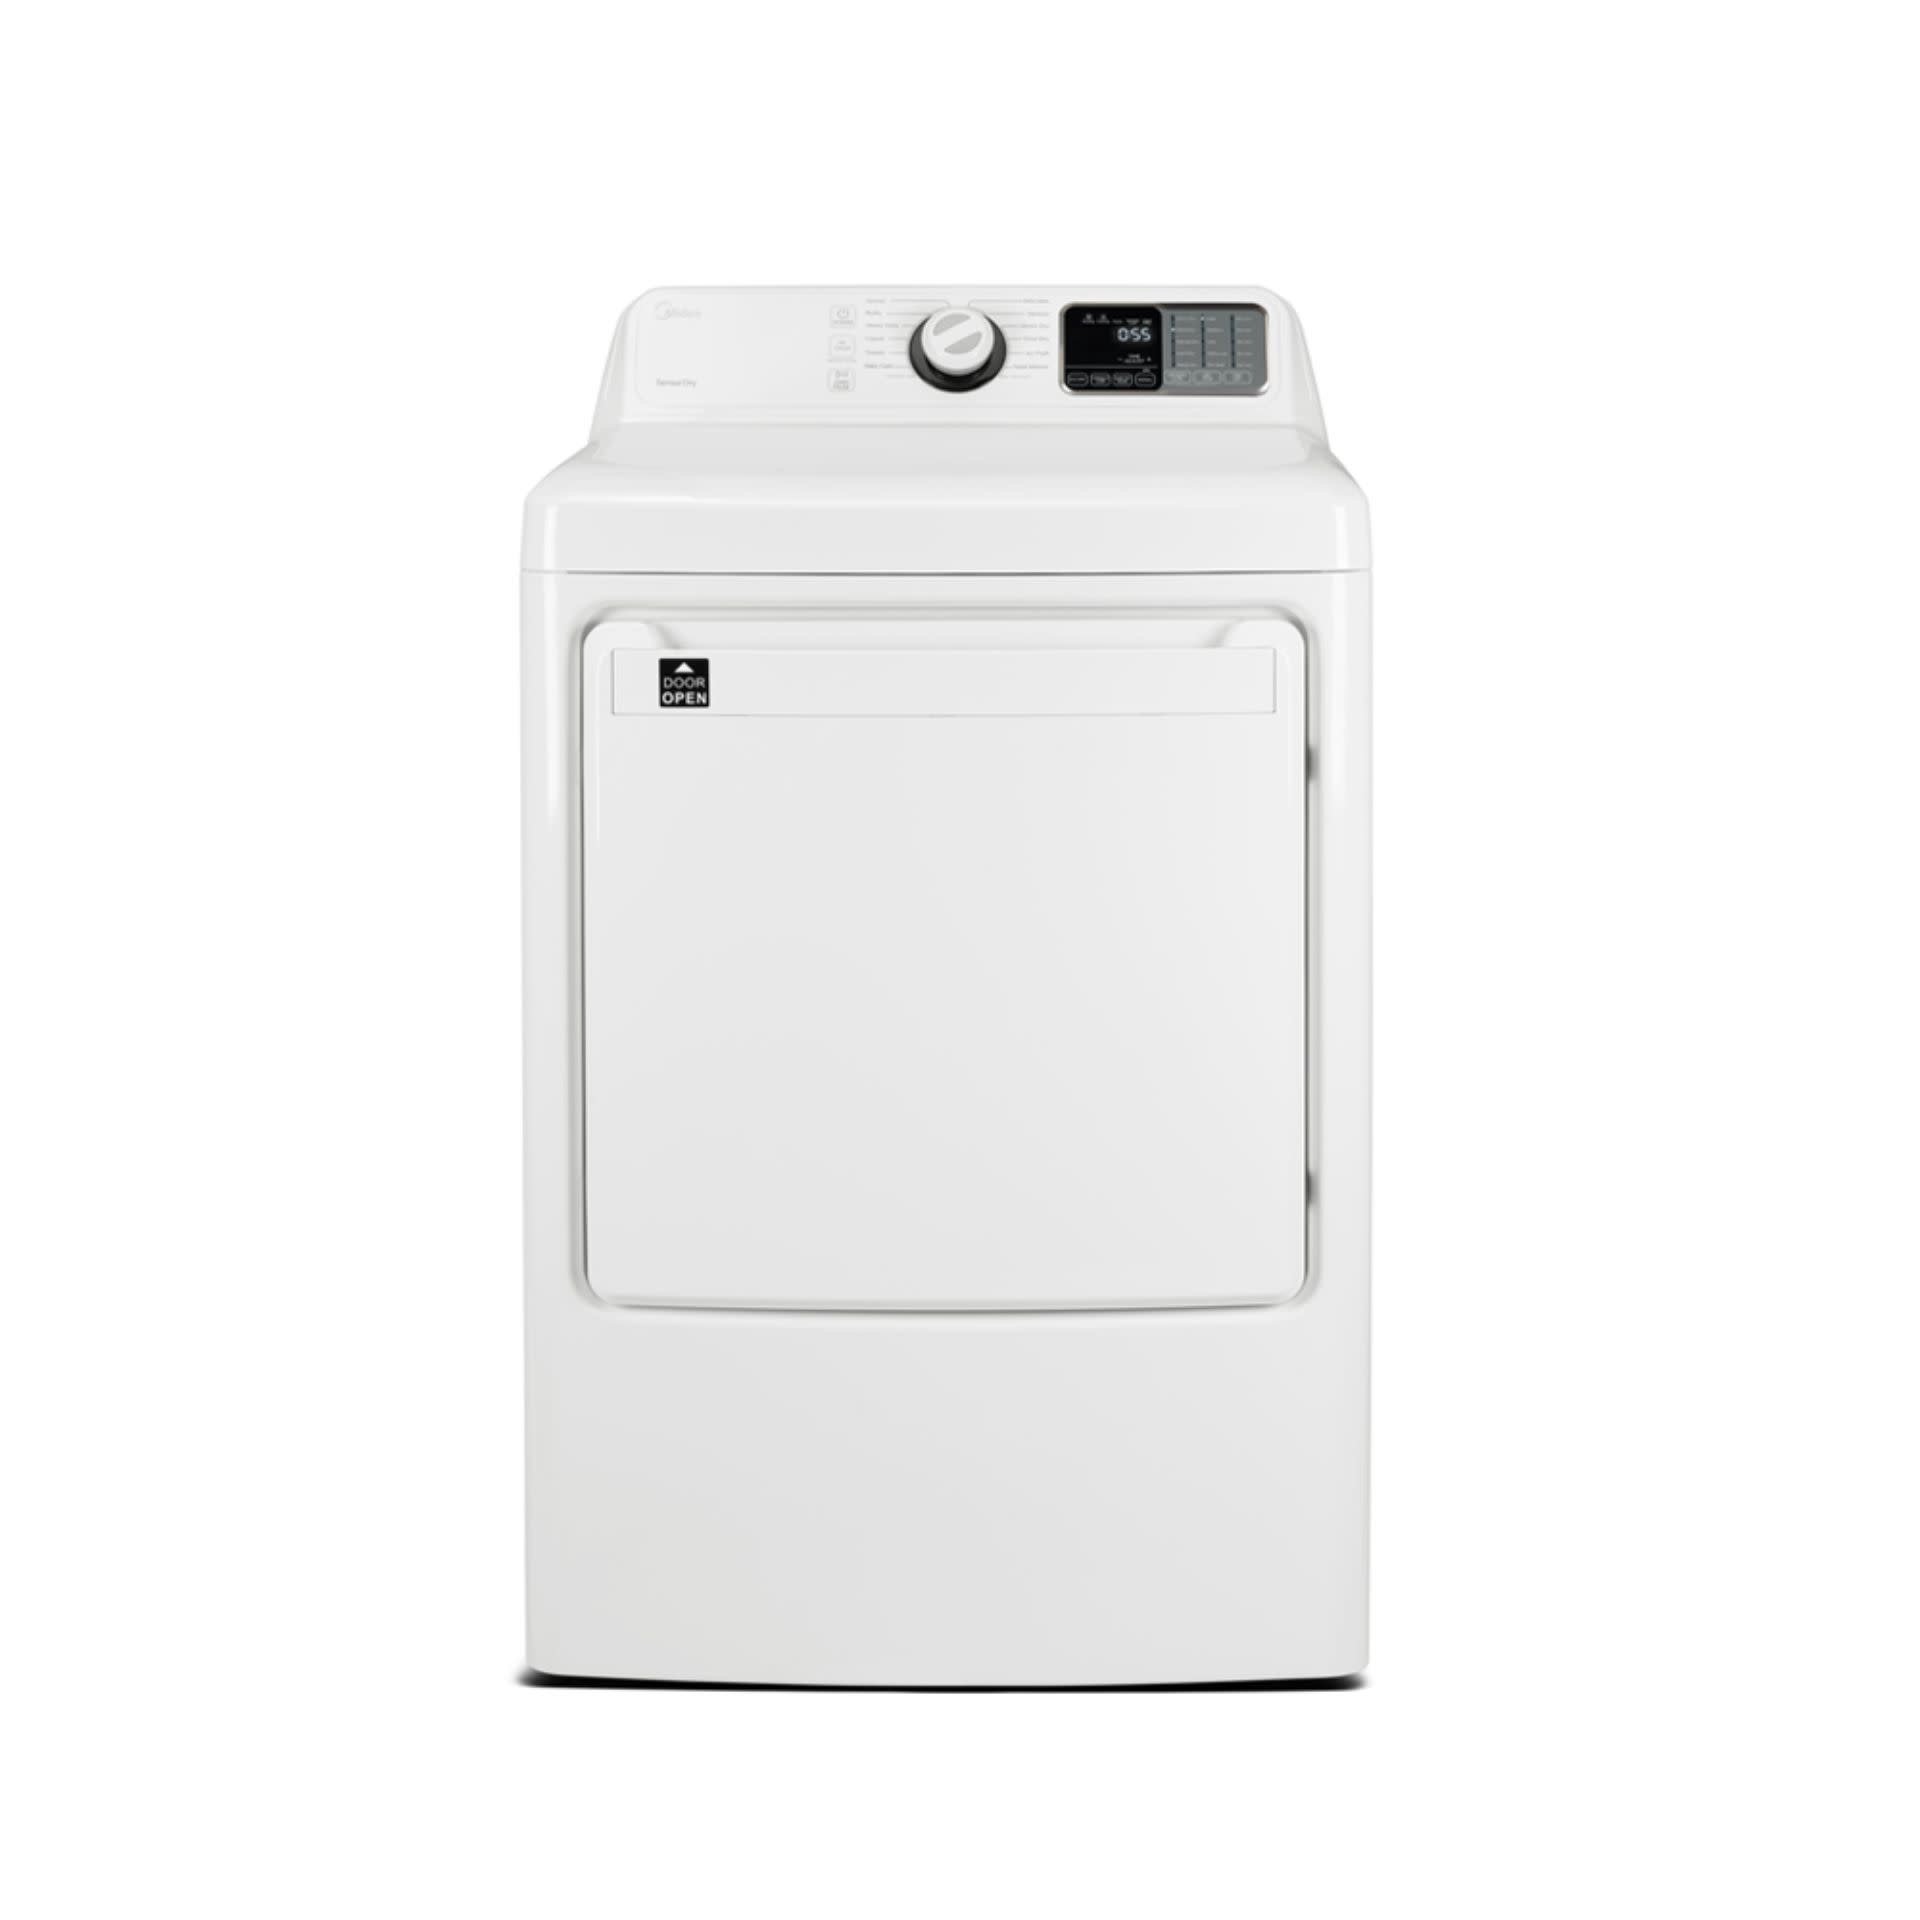 Midea *Midea MLE45N1BWW   7.5-cu ft Electric Dryer (White)